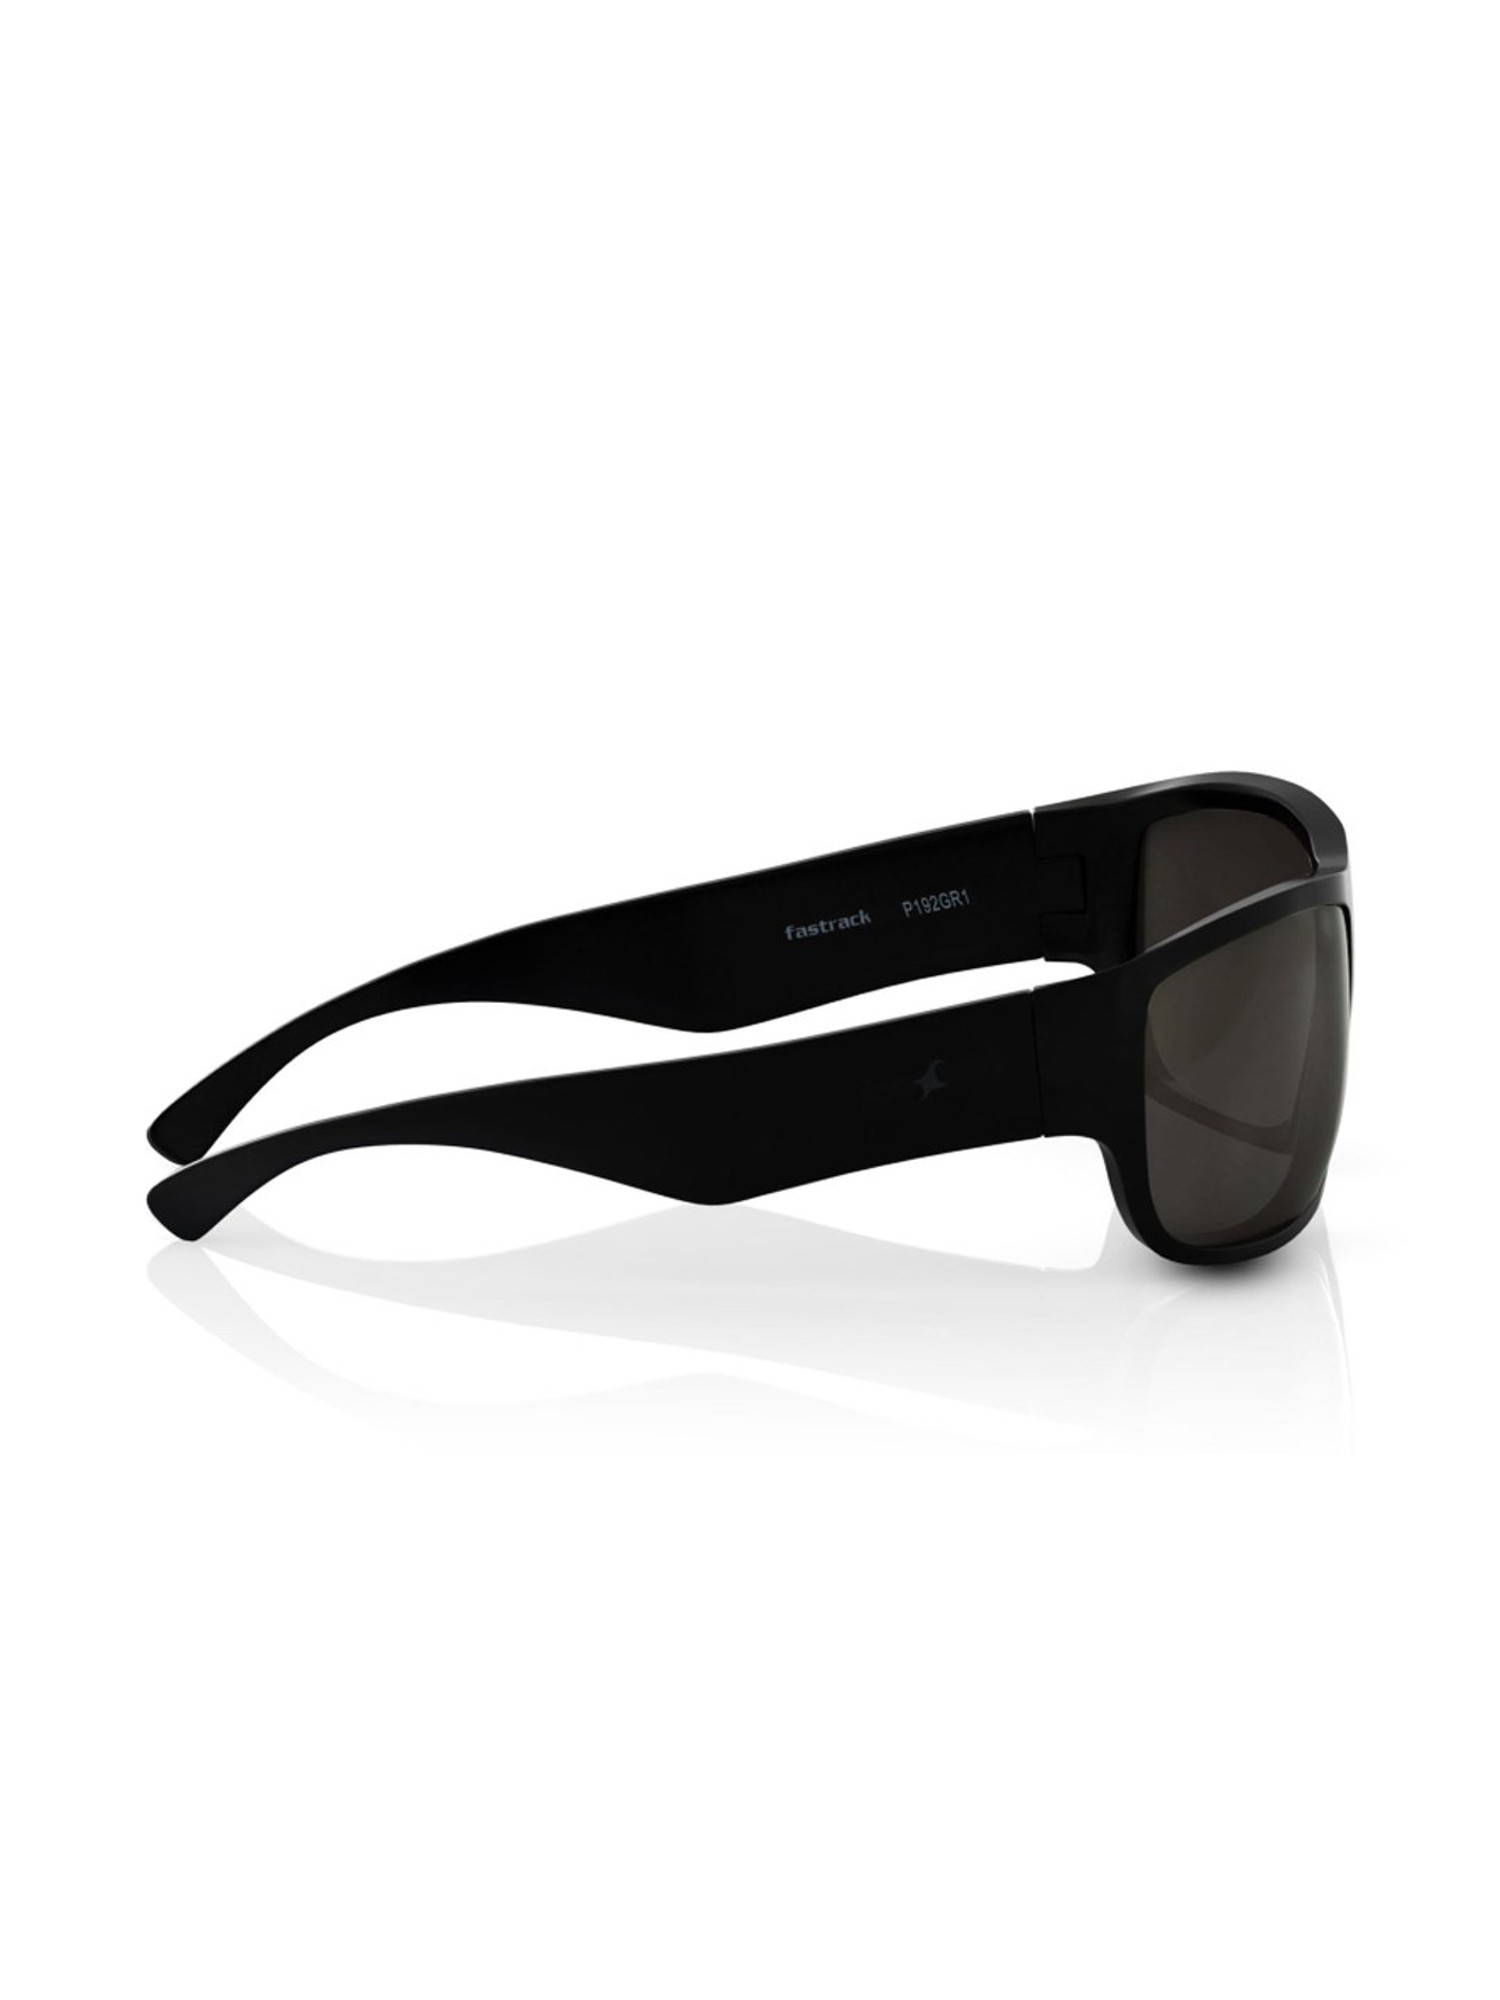 Fastrack Gray Wayfarer Sunglasses ( p326bk1 ) - OneStop Vision